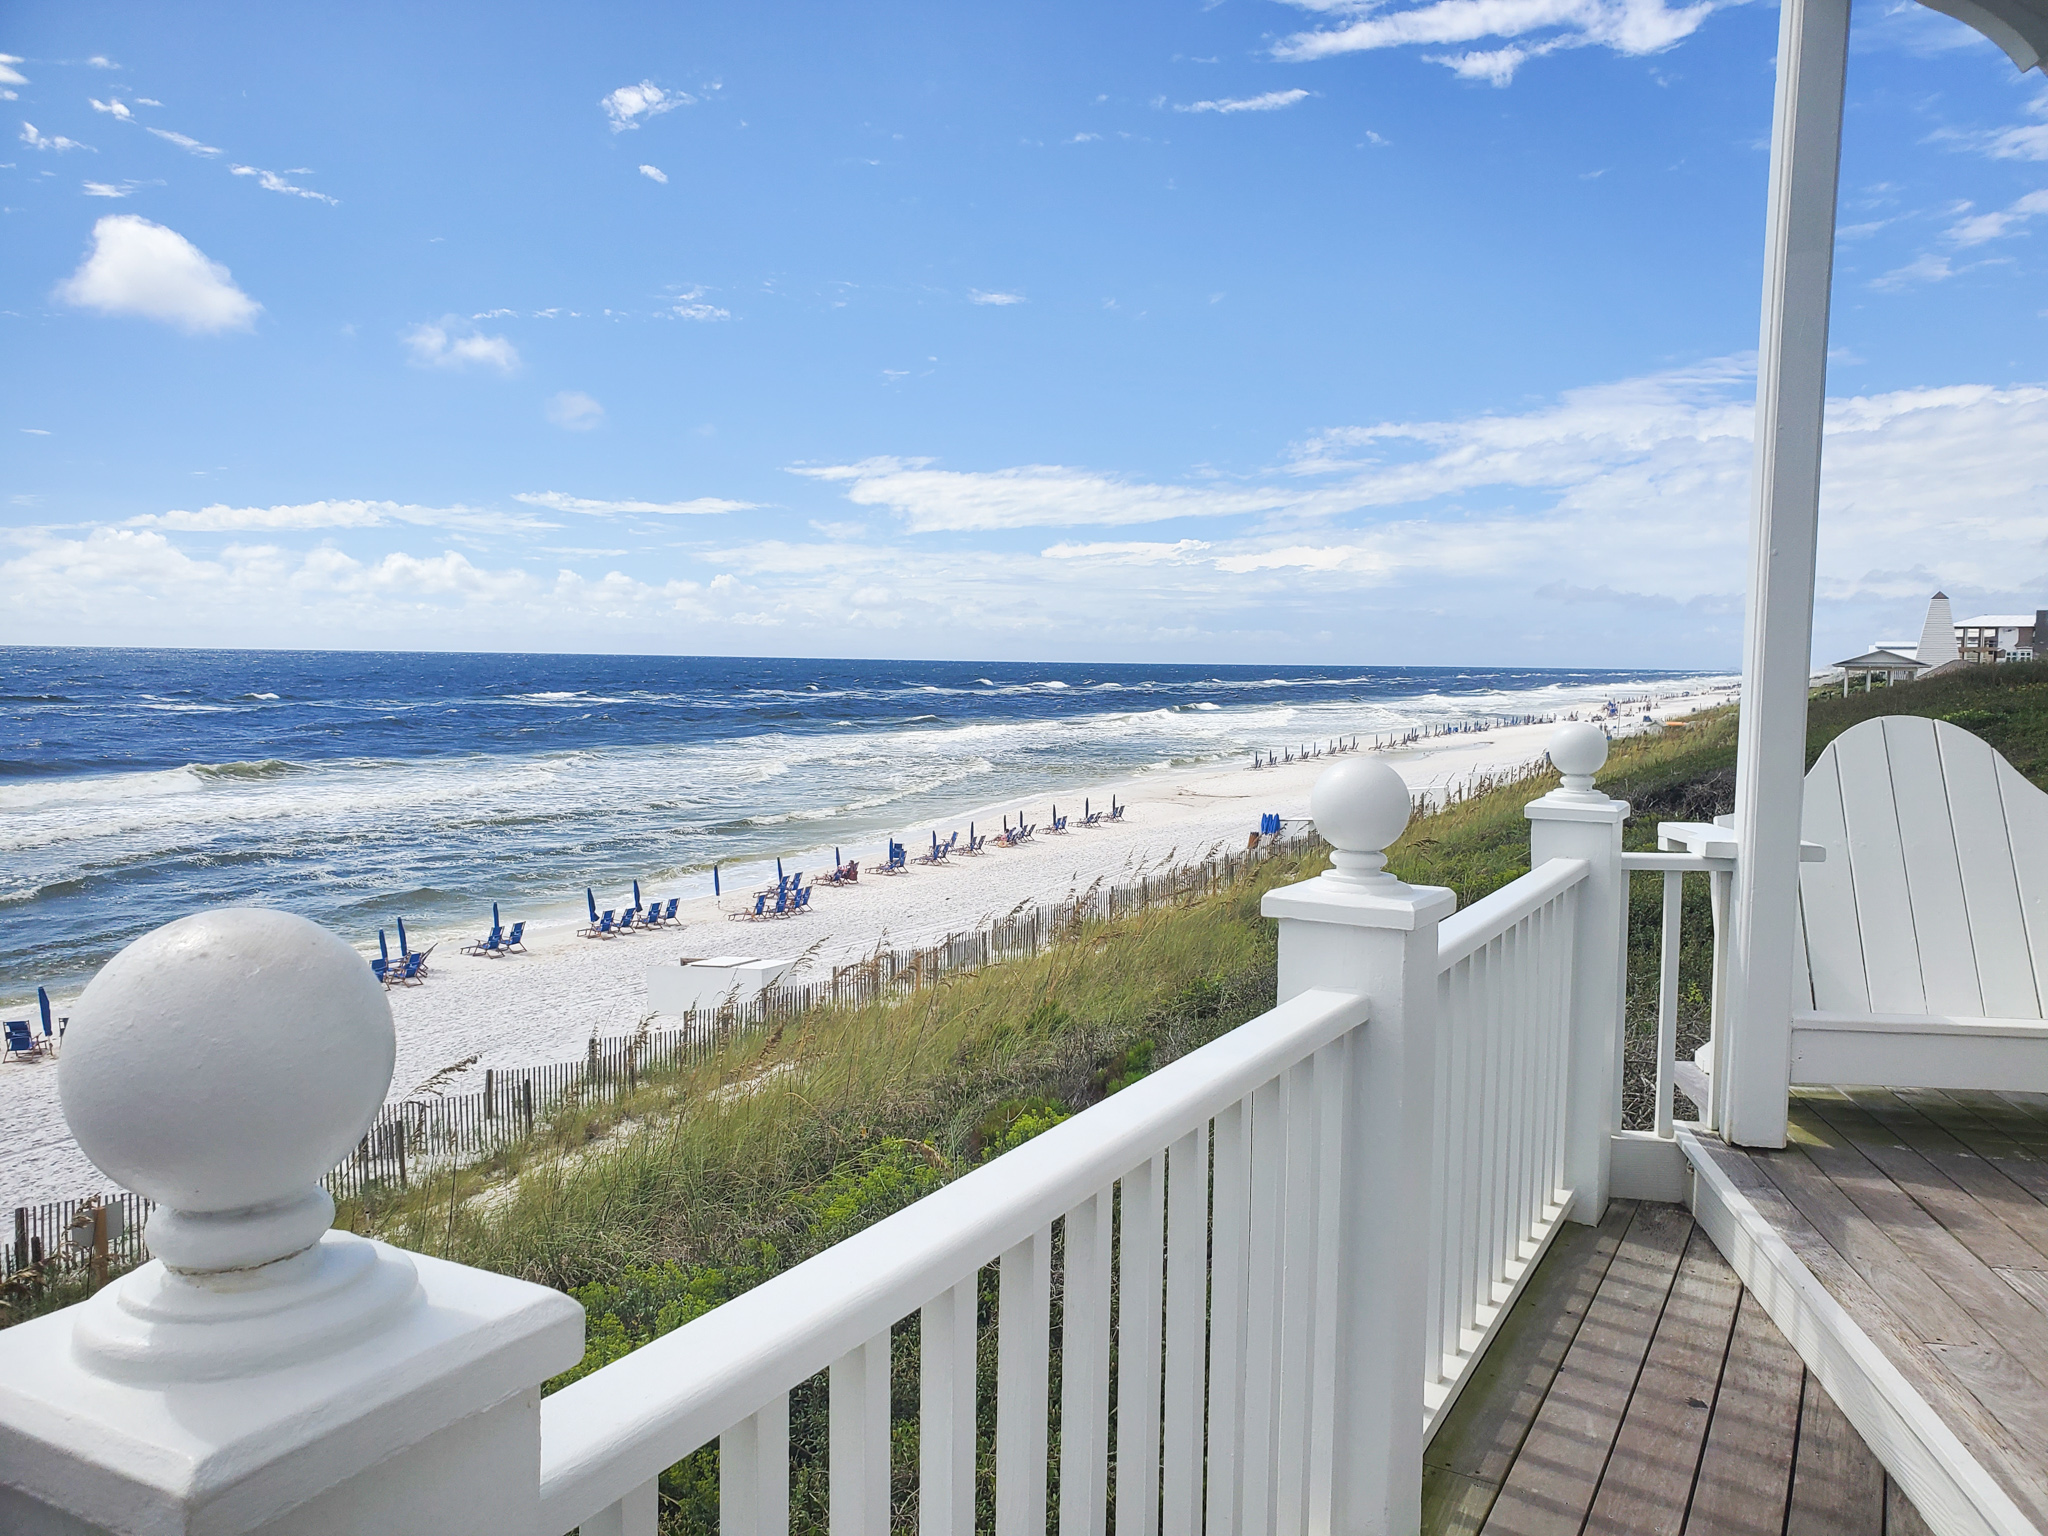 Beach Cottage Resort Destin Florida 30a Seaside Condo